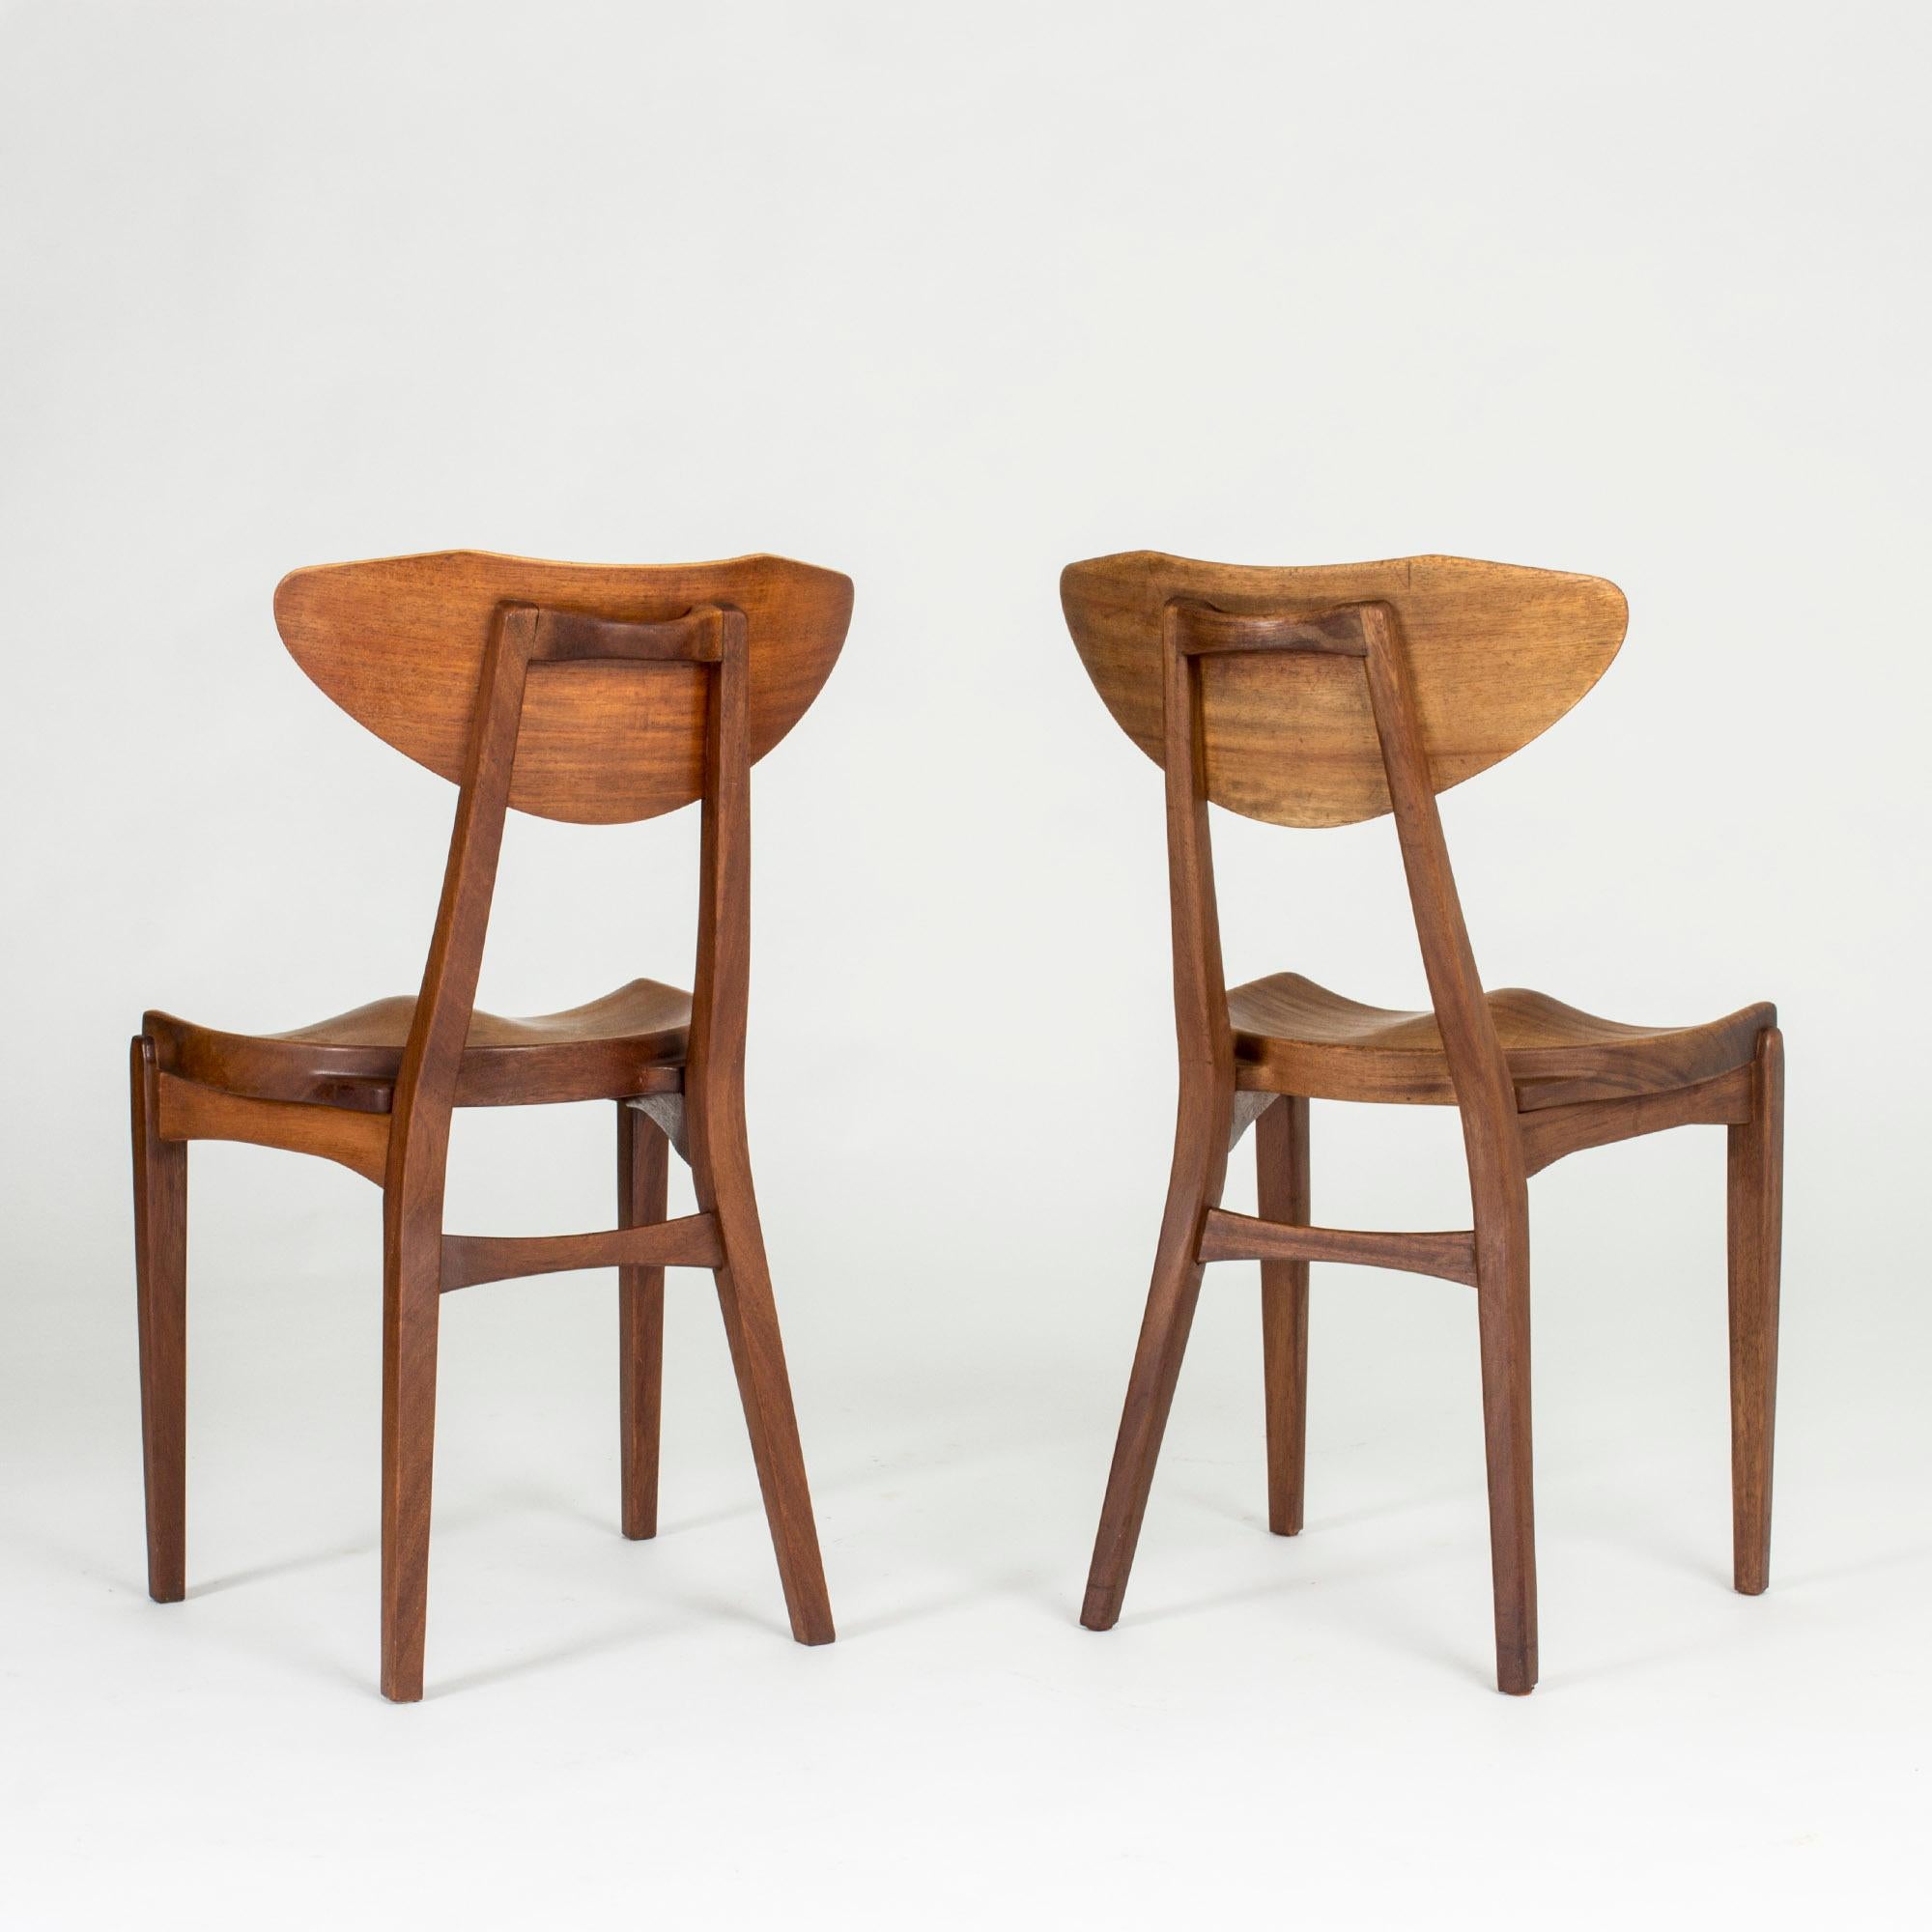 Mid-20th Century Set of Ten 1950s Dining Chairs by Richard Jensen and Kjærulff Rasmussen